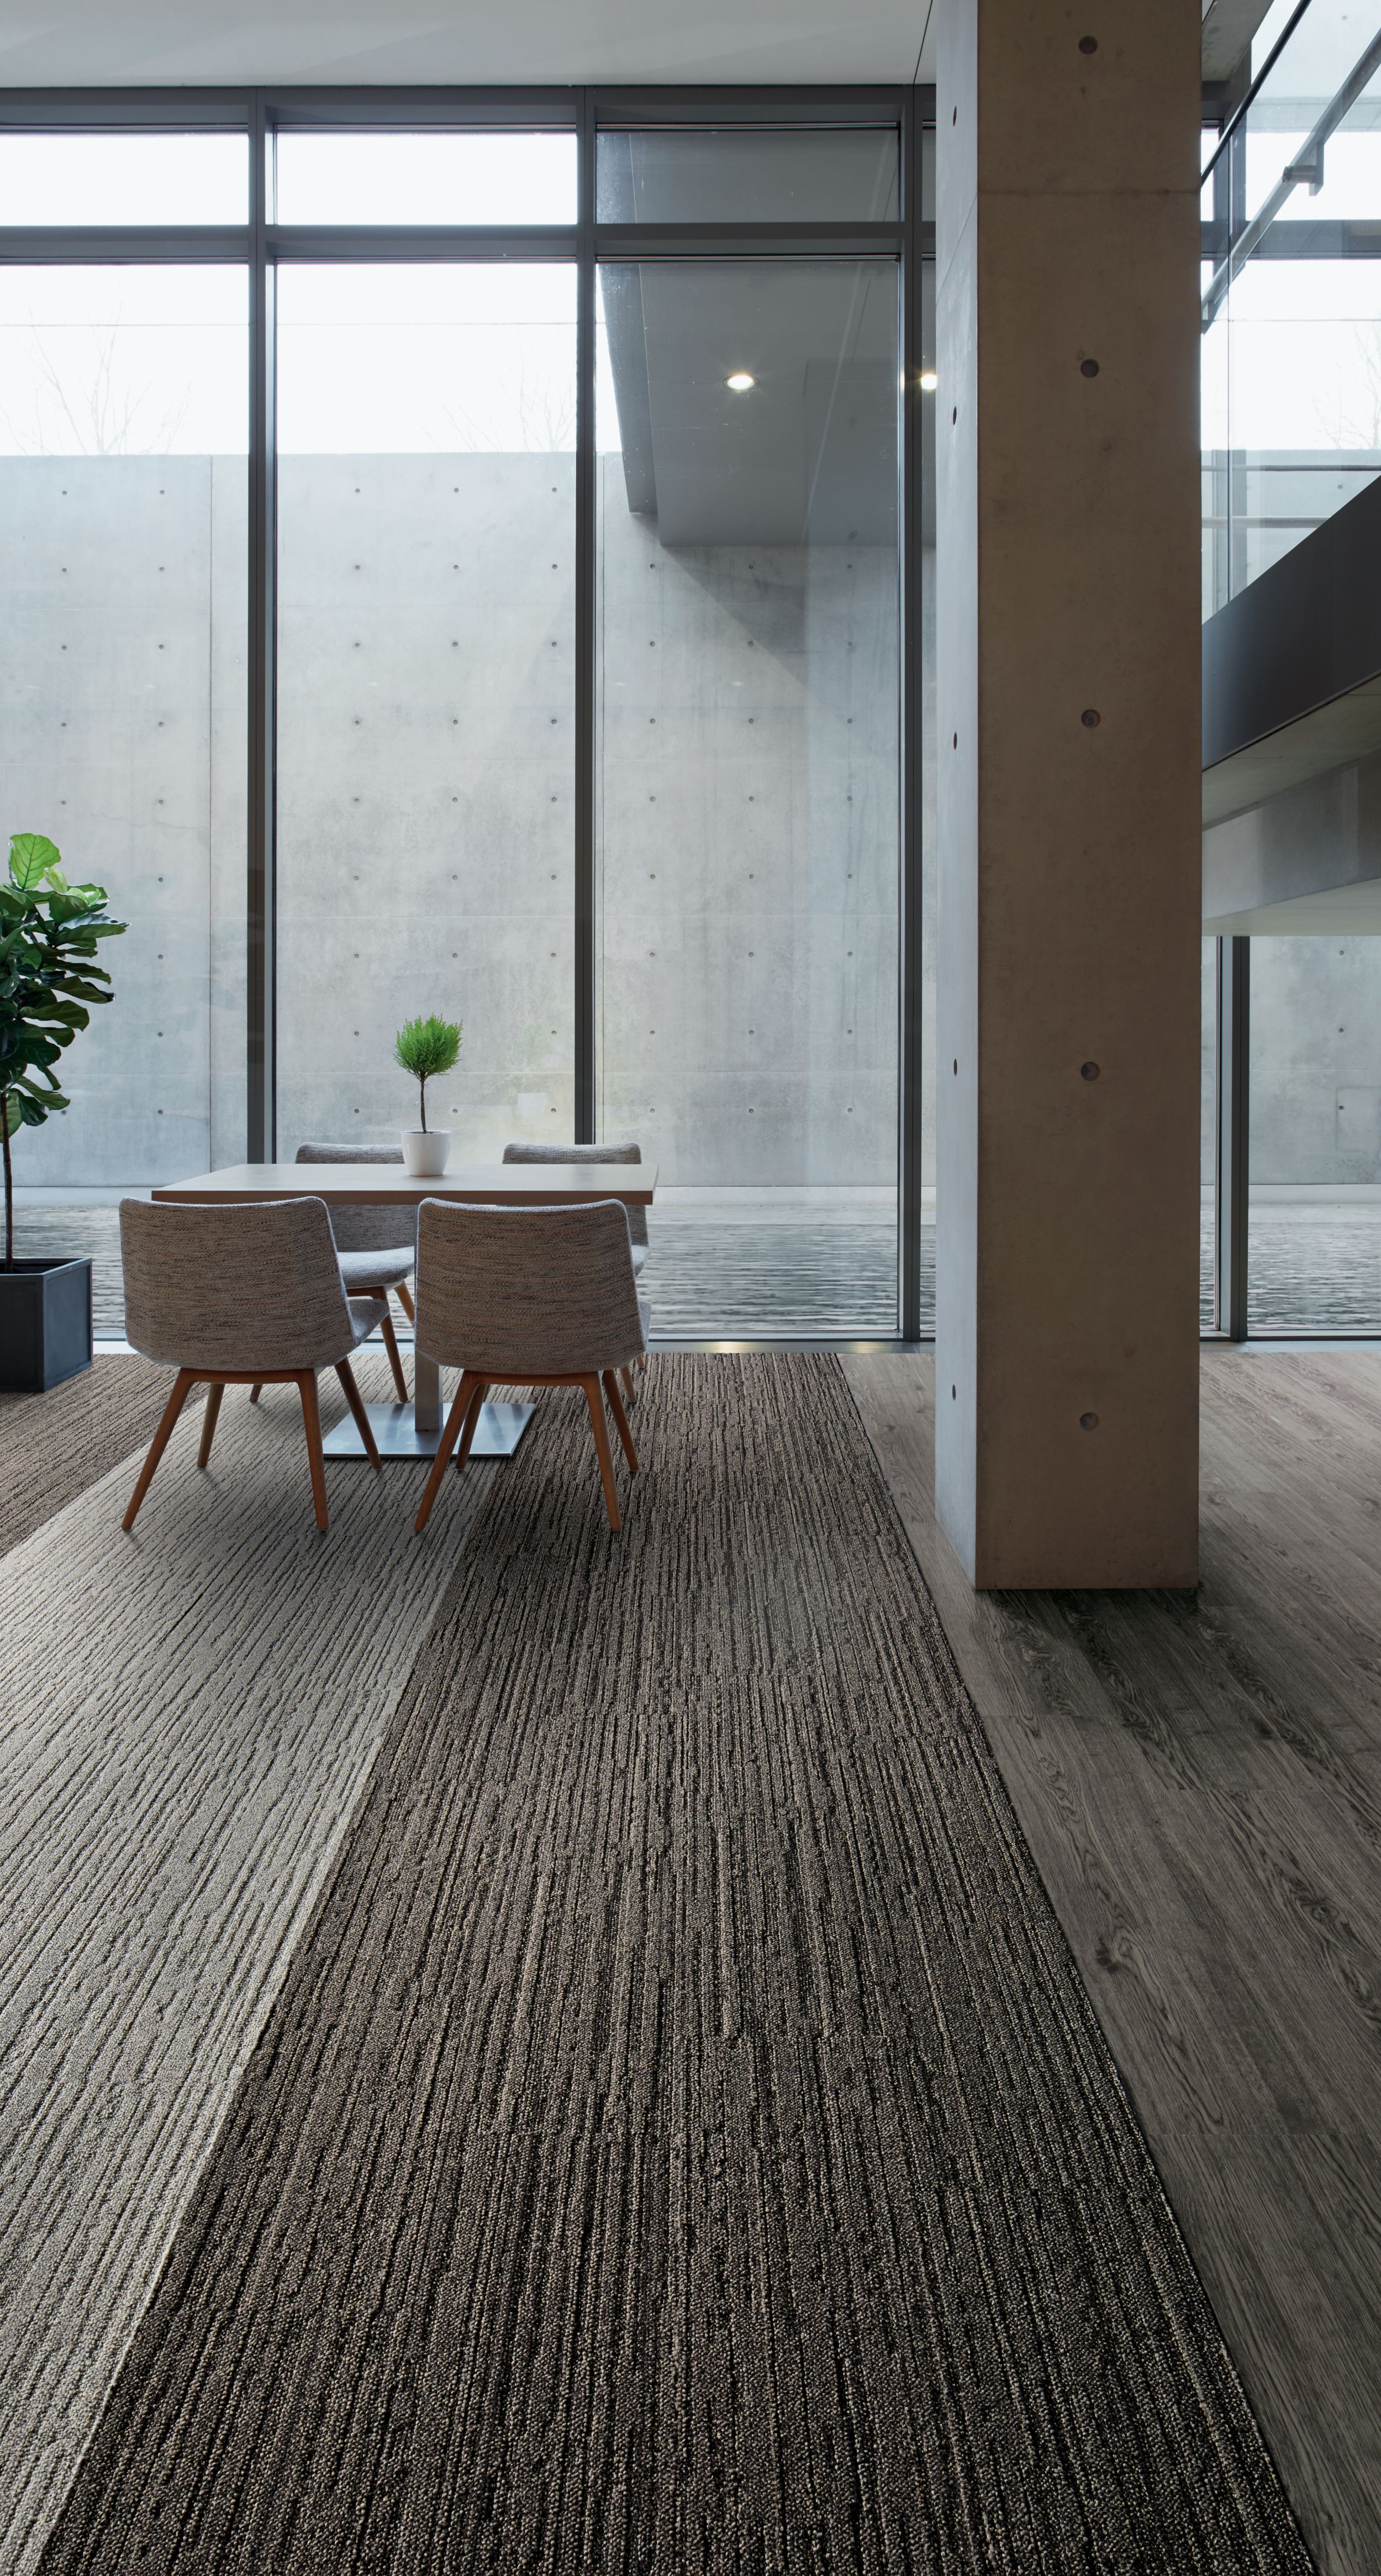 Interface WW880 plank carpet tile and Natural Woodgrains LVT in office common area imagen número 2